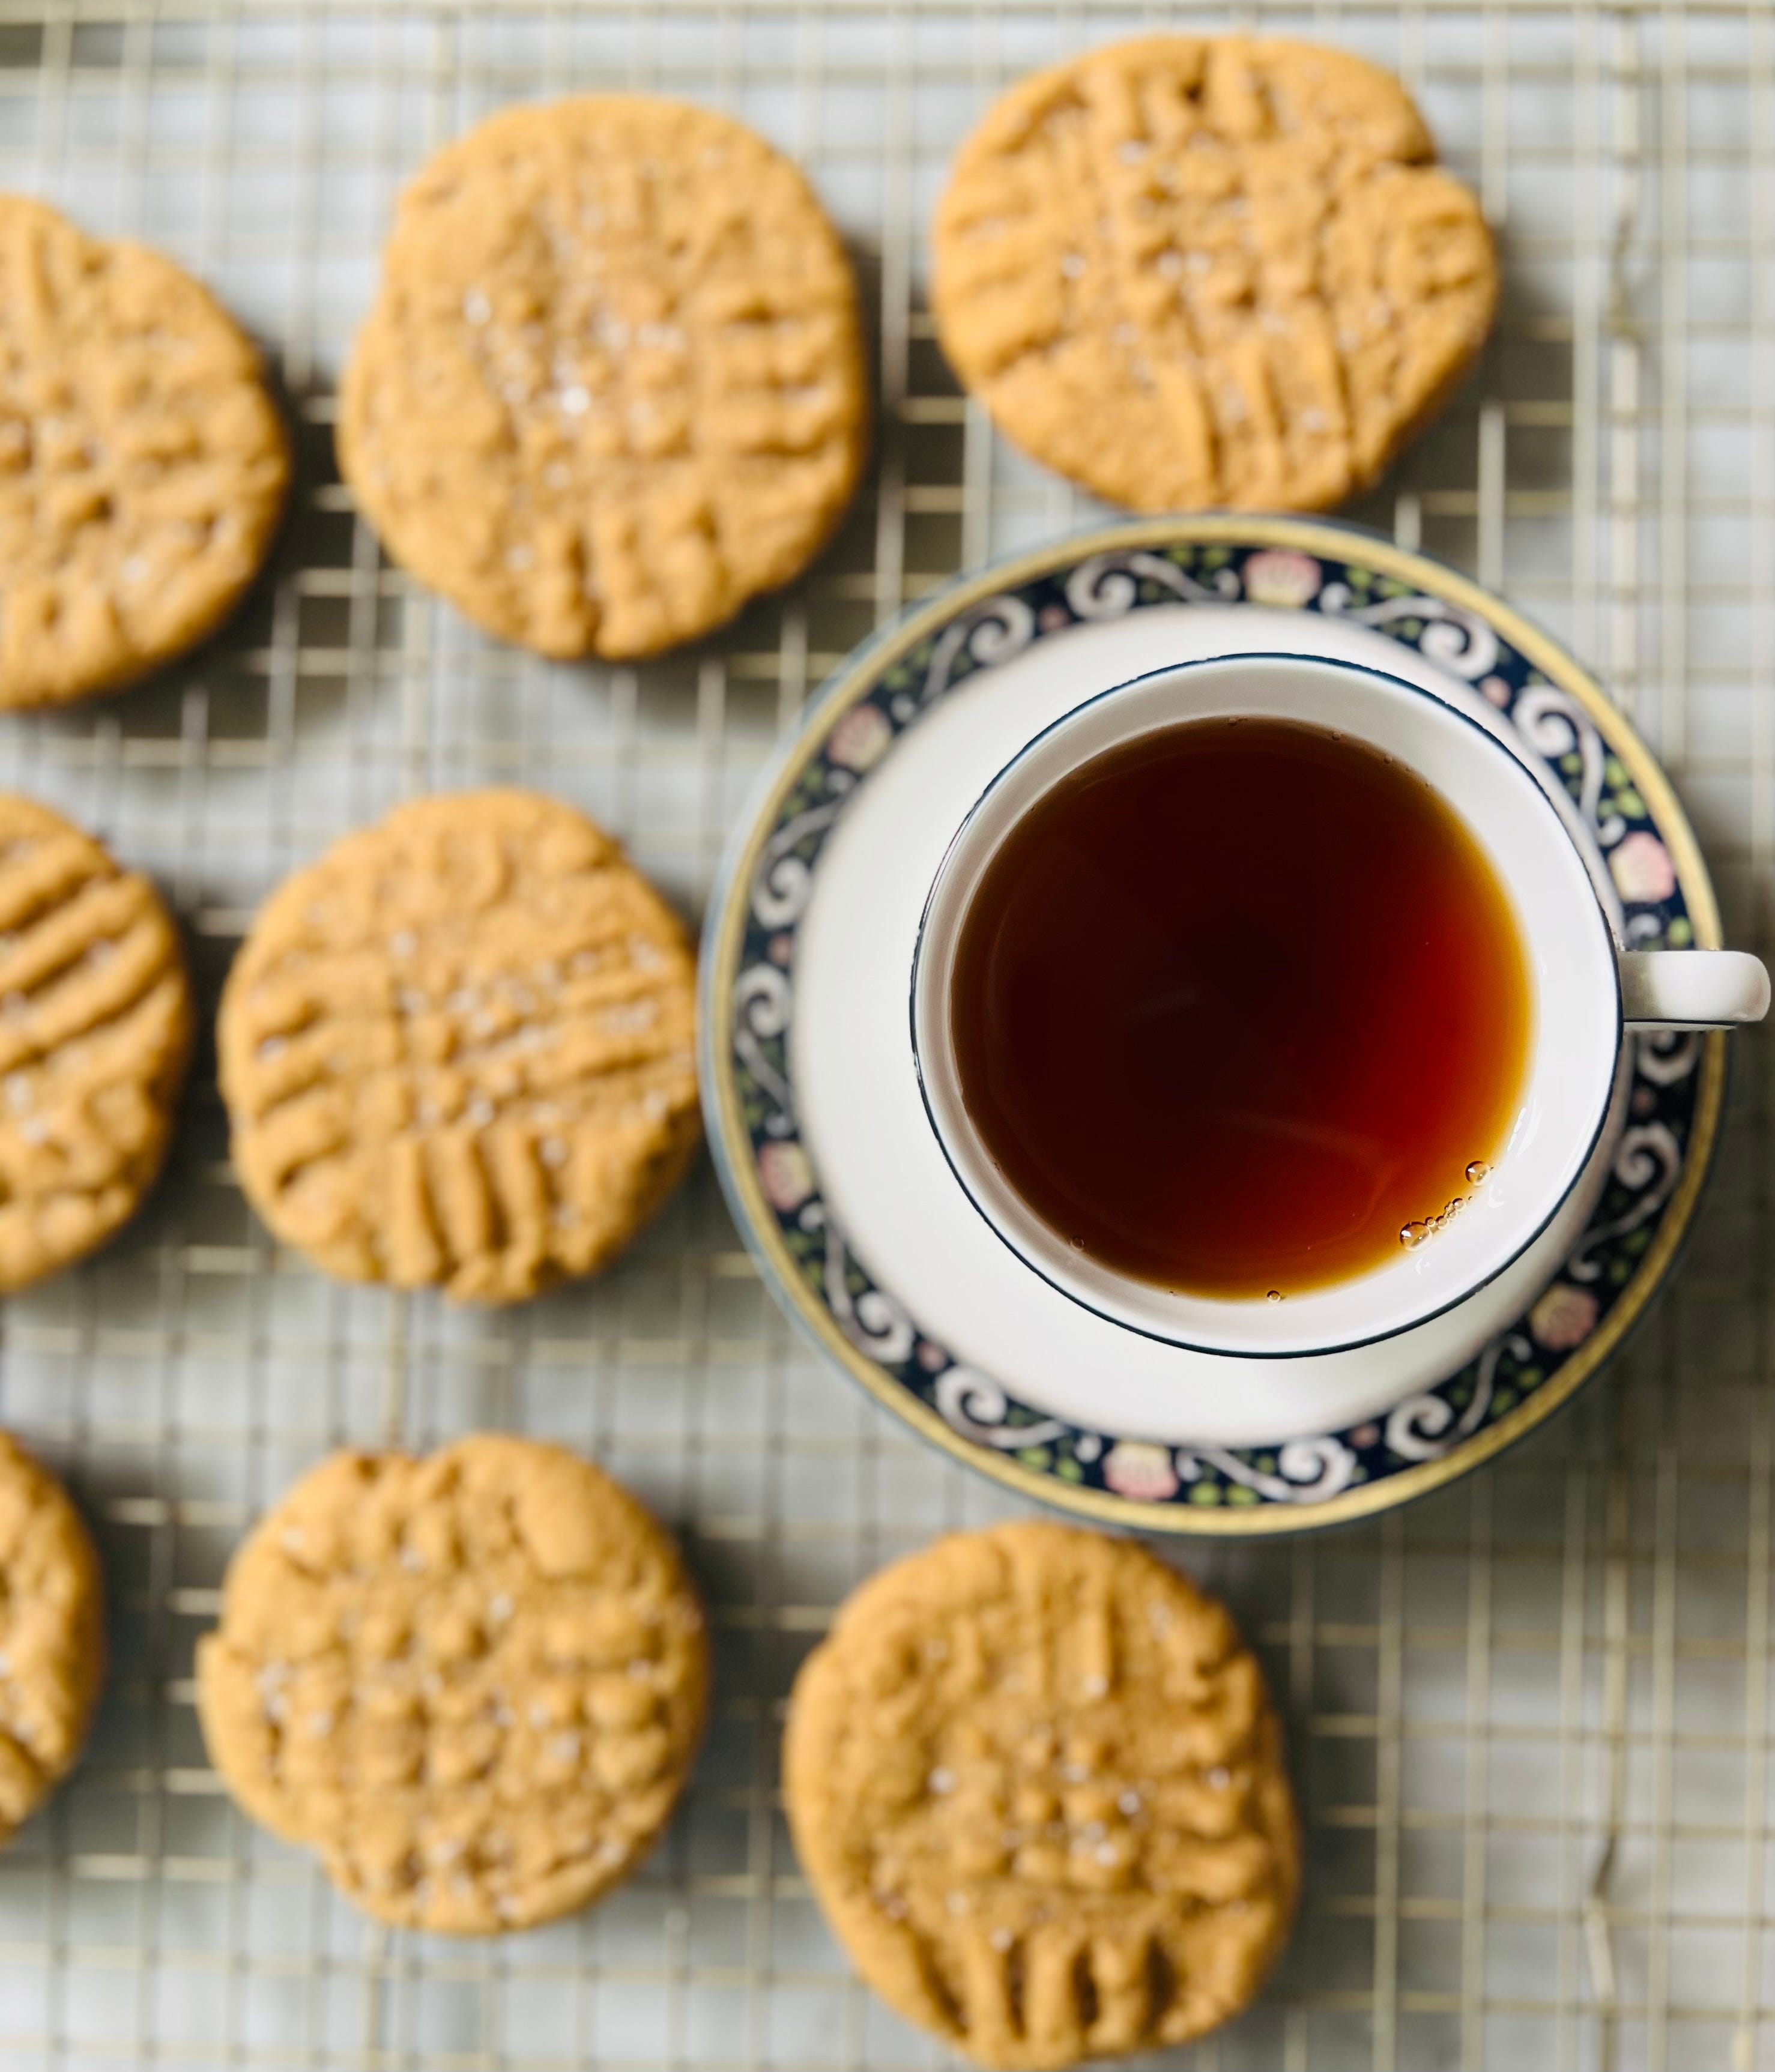 Outrageous' tea recipe involving pinch of salt draws US embassy comment, Tea